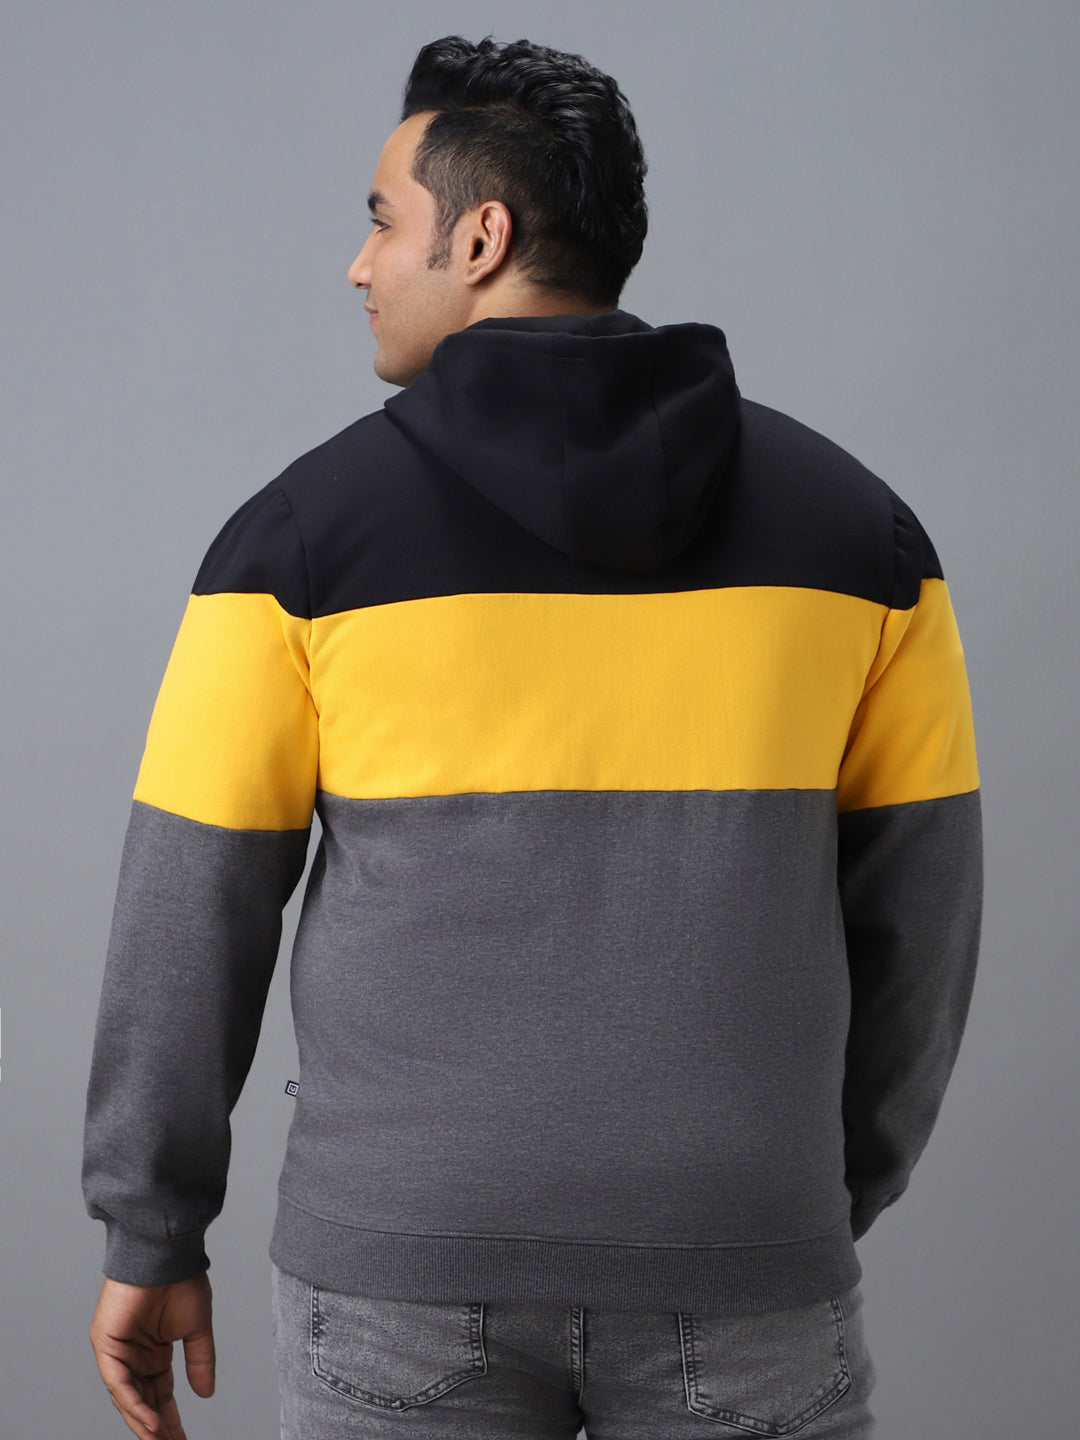 Urbano Plus Men's Black, Yellow, Charcoal Cotton Full Sleeve Zippered Hooded Sweatshirt